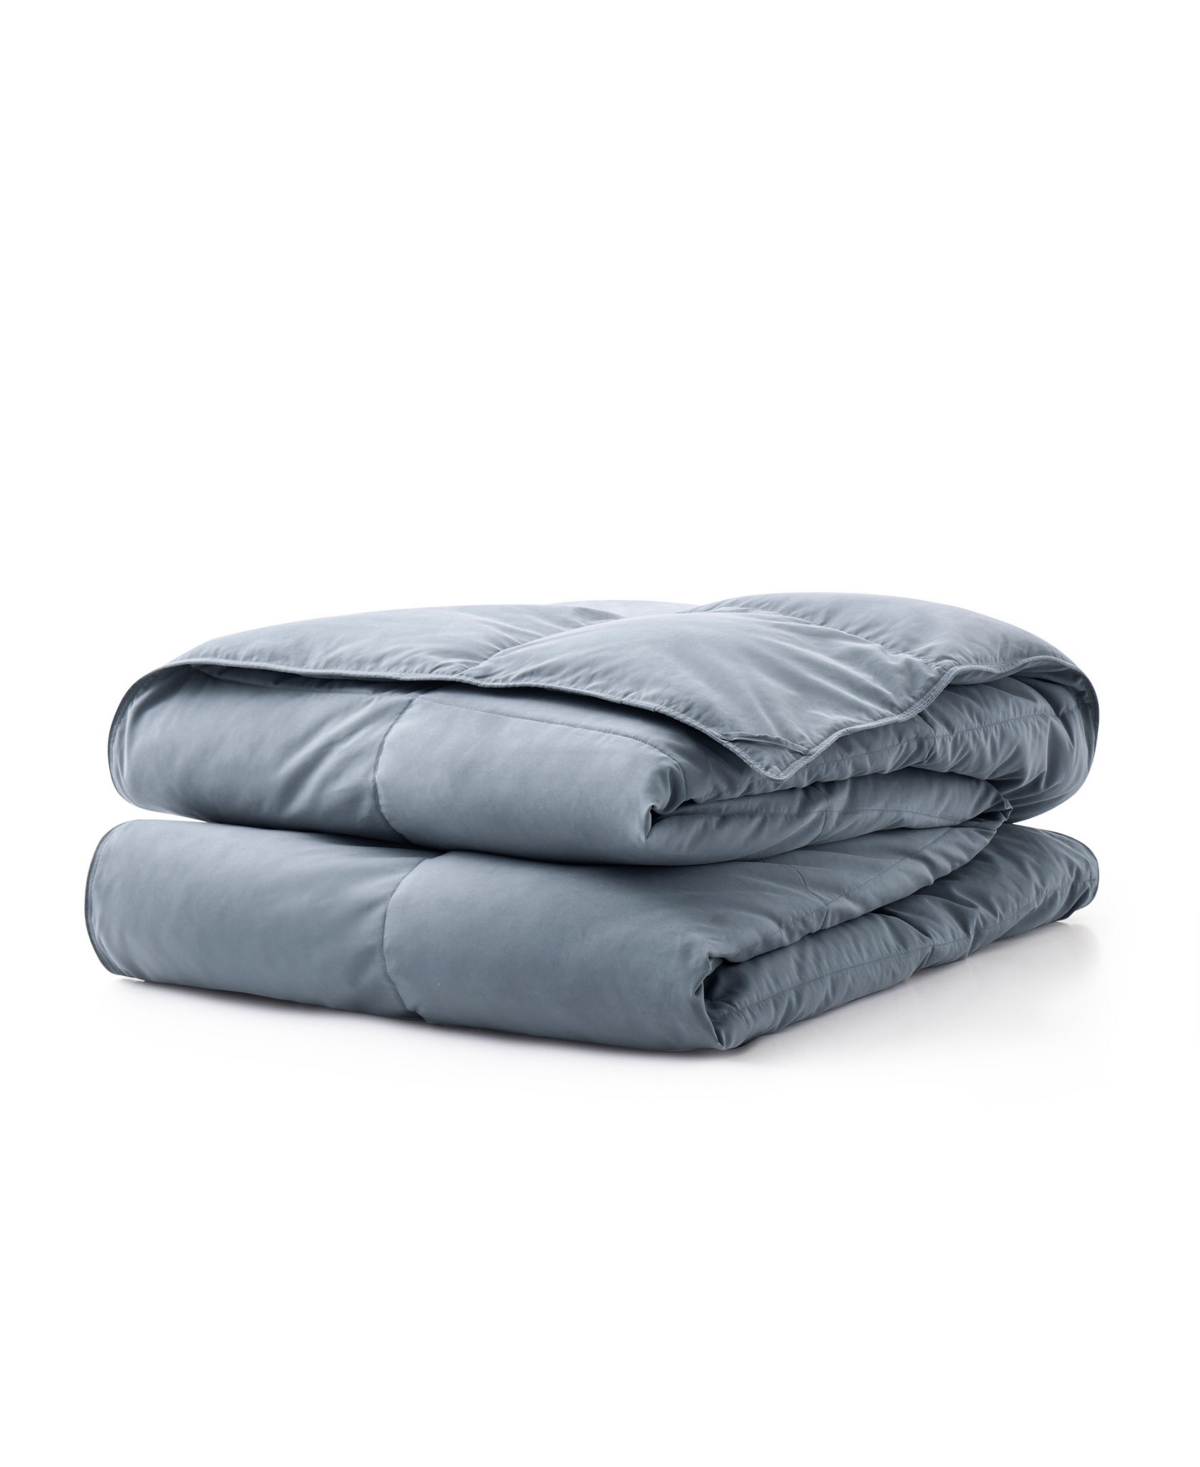 Unikome All Season 300 Thread Count Cotton Goose Down Fiber Comforter, Full/queen In Gray